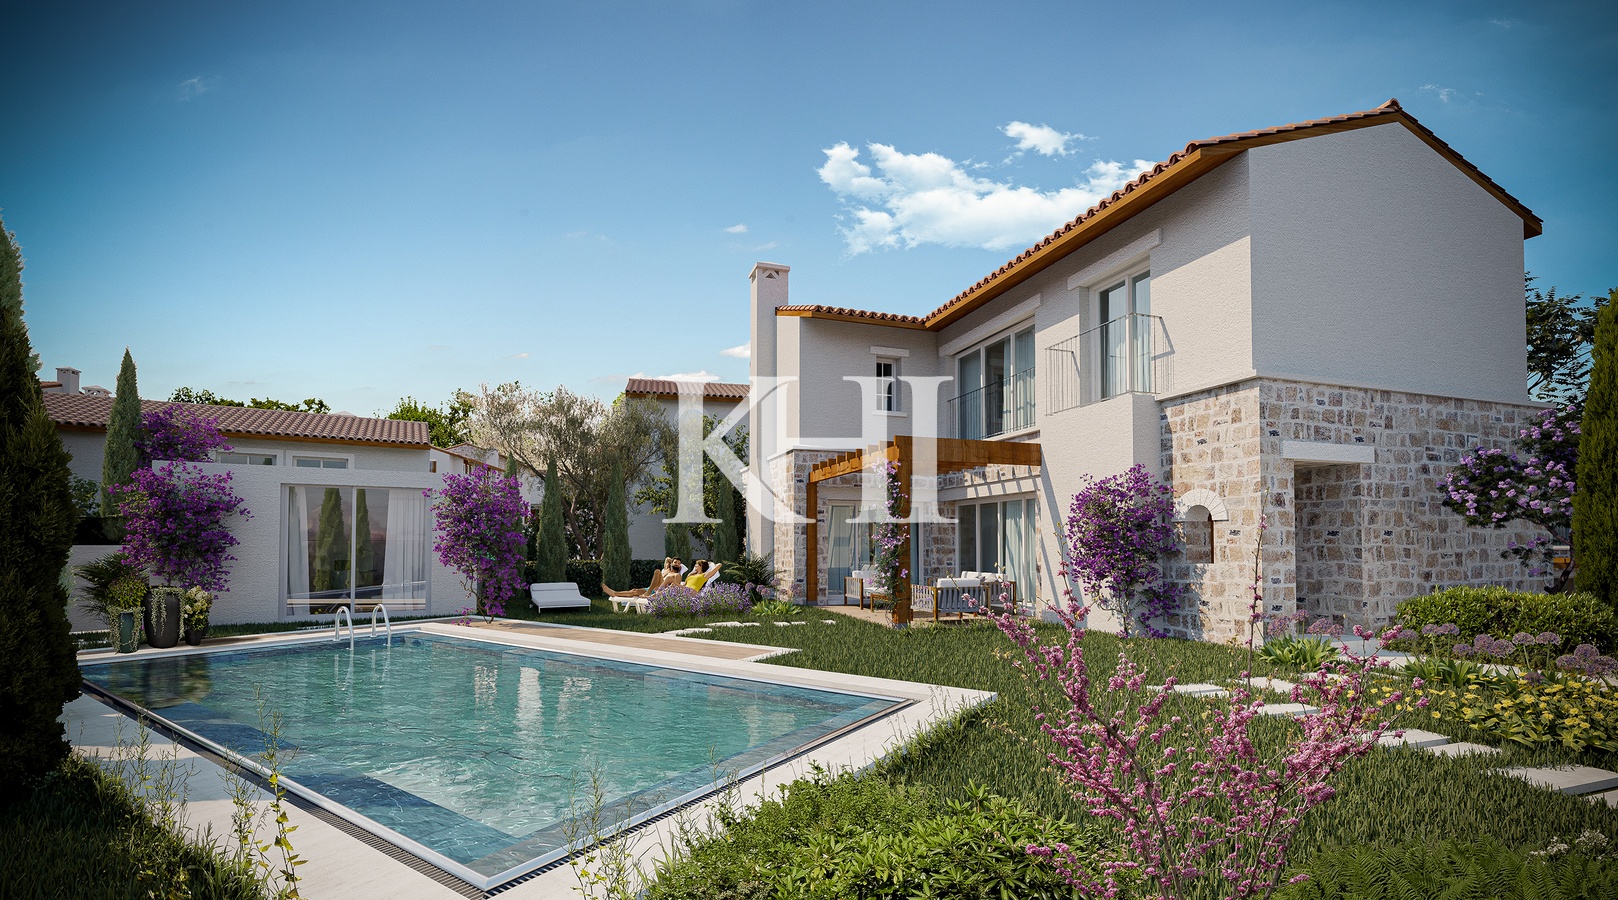 New Villa Project in Bodrum Slide Image 9